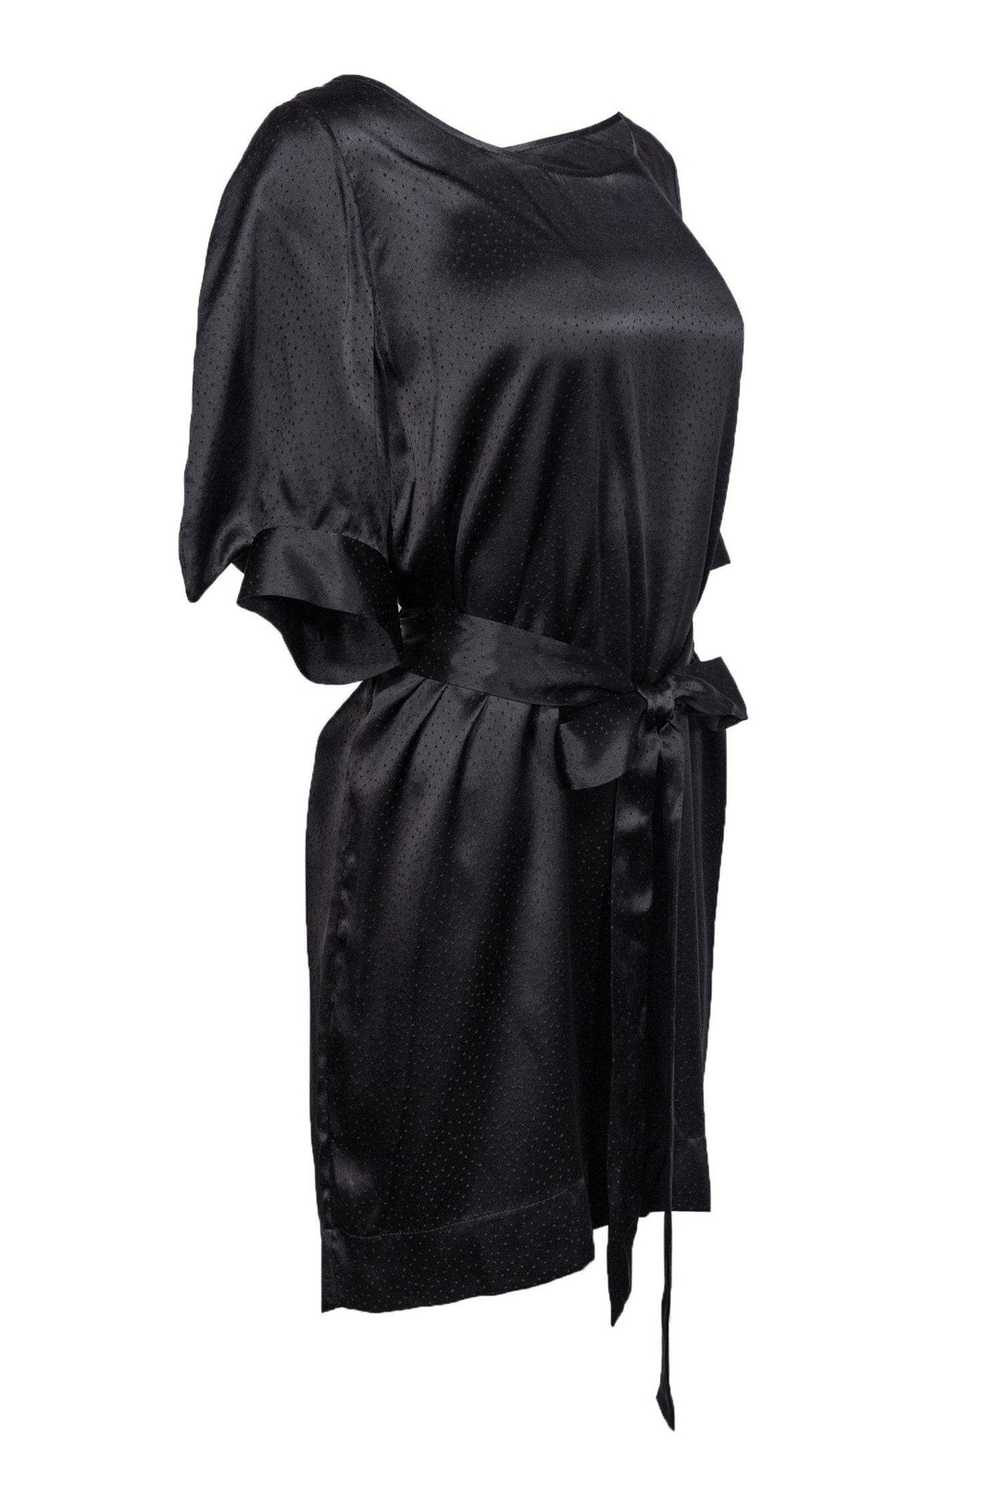 Stella McCartney - Black Silk Dress w/ Polka Dots… - image 2